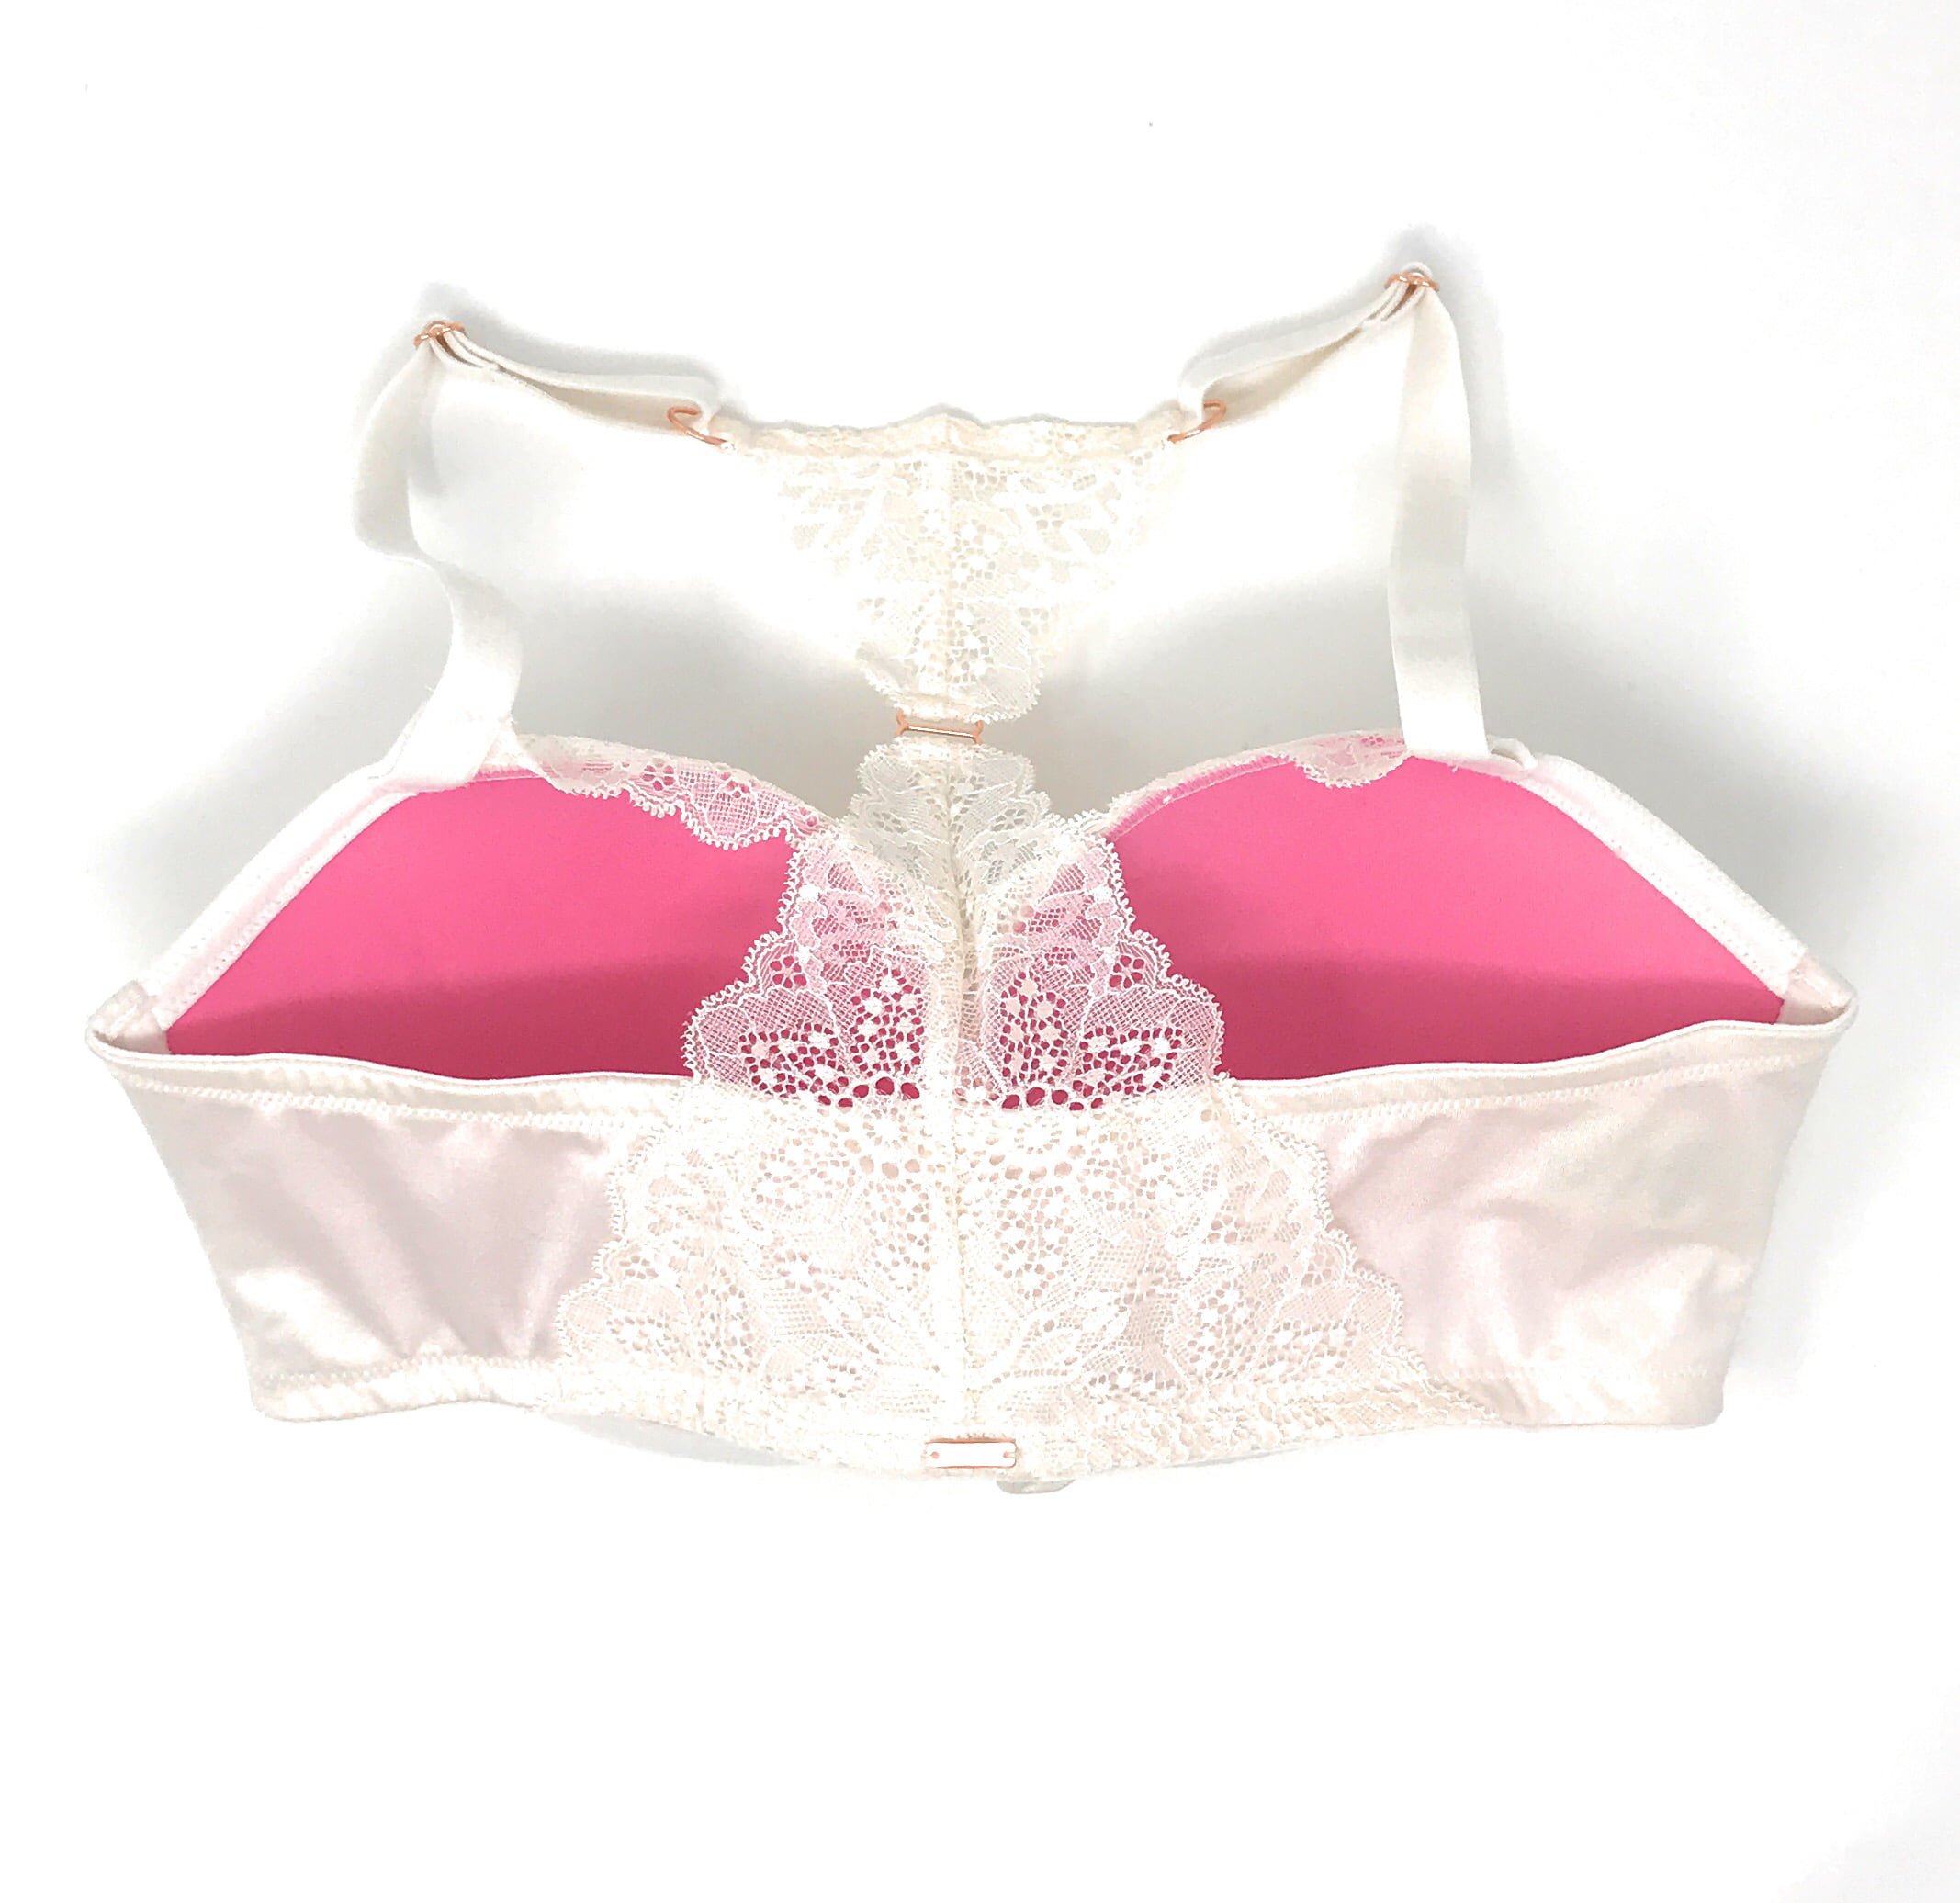 Victoria's Secret Magenta Push-up Bra. Size 36C Pink - $23 - From Barbs